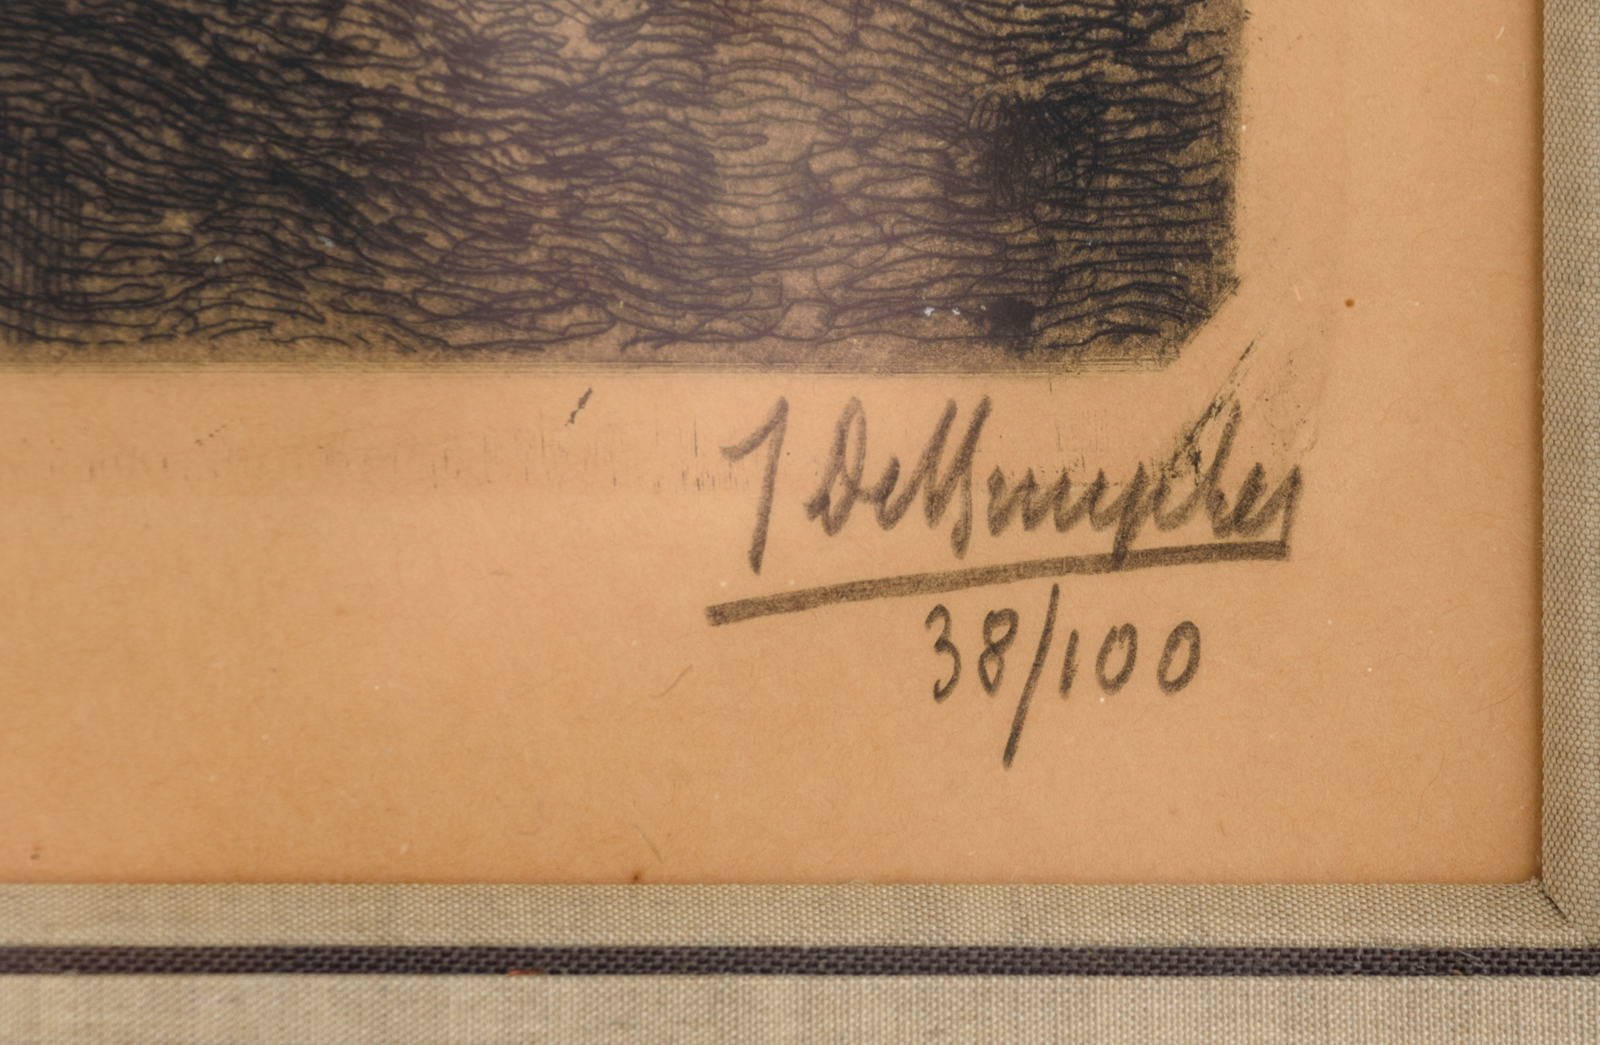 De Bruycker, J., Pont Neuf Paris, etching and aquatint on paper, N° 38/100, 46,5 x 56,5 cm - Image 5 of 5